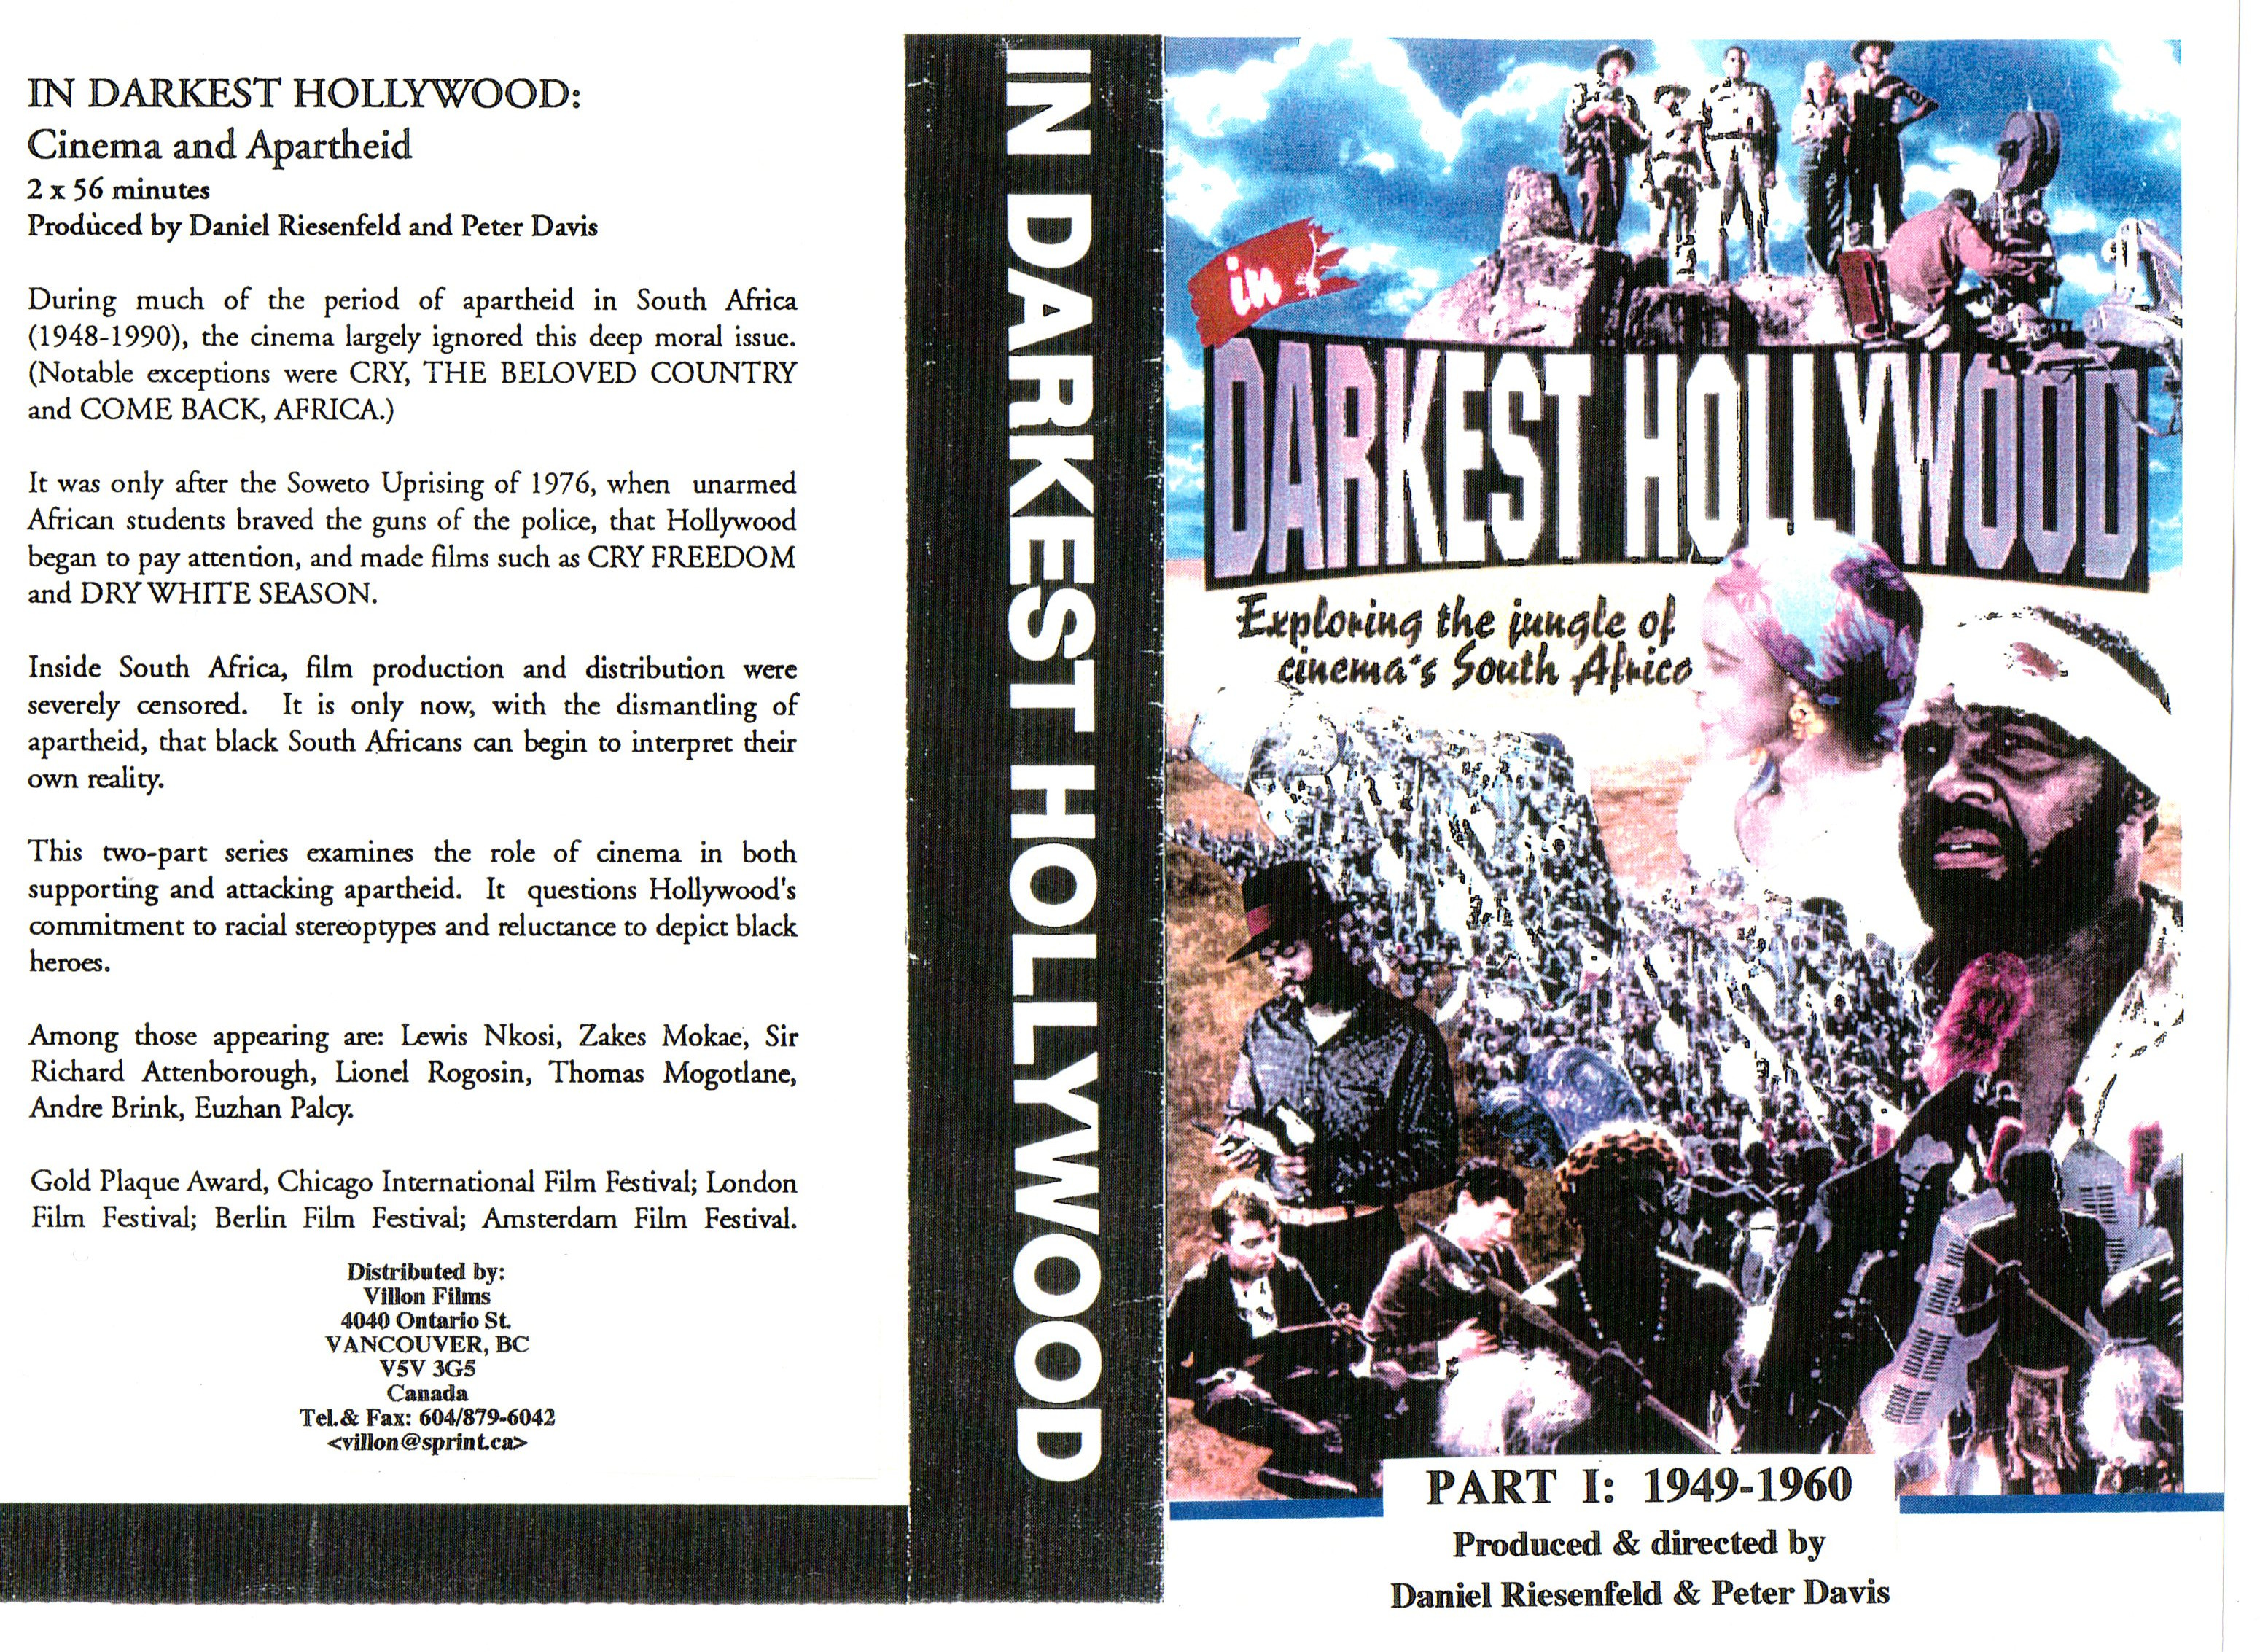 In Darkest Hollywood: Cinema and Apartheid - VHS Sleeve.